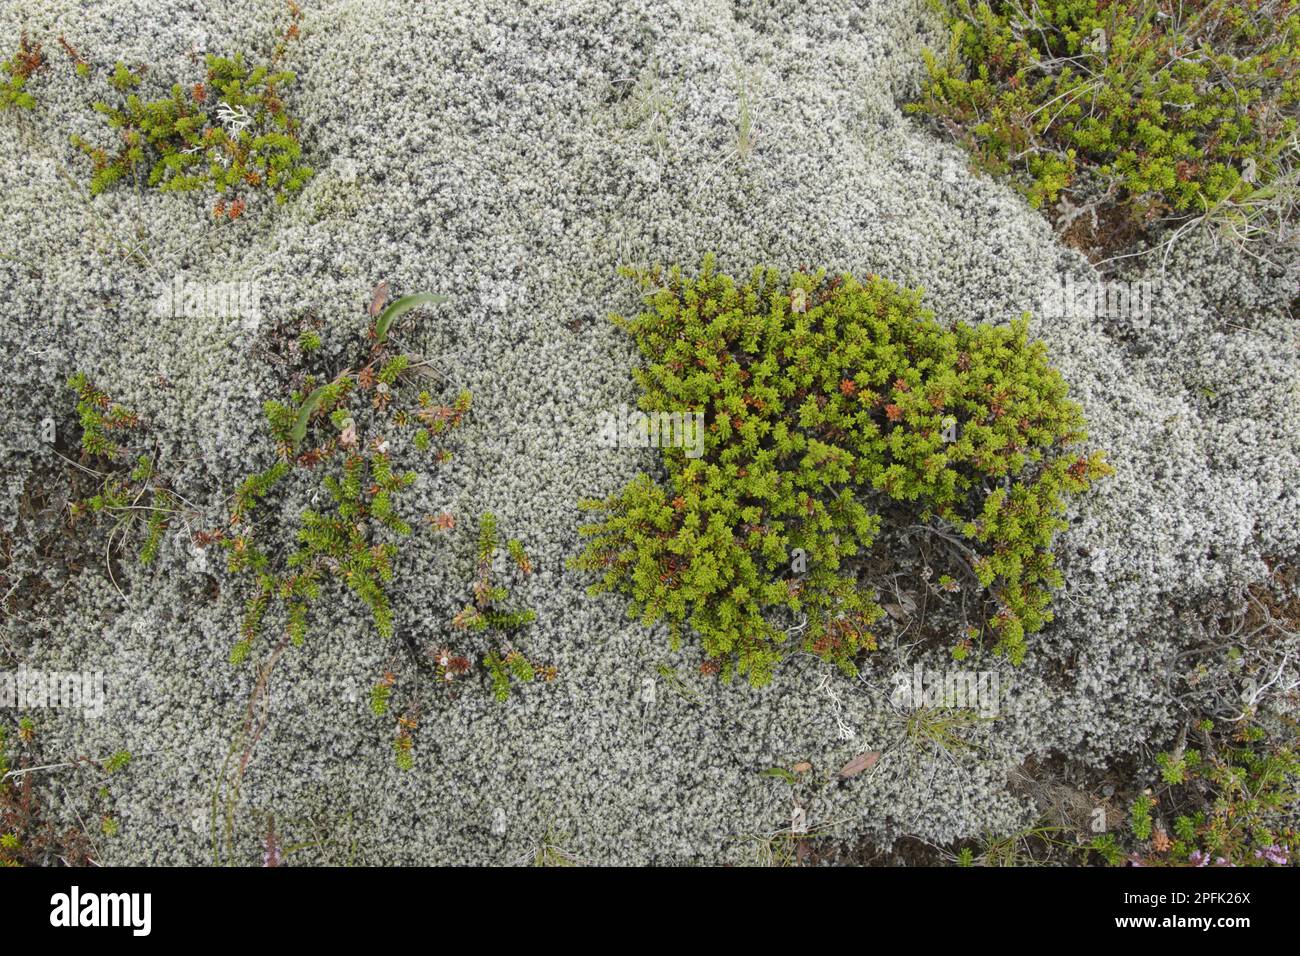 Crowberry (Empetrum nigrum) growing amongst moss, Iceland Stock Photo